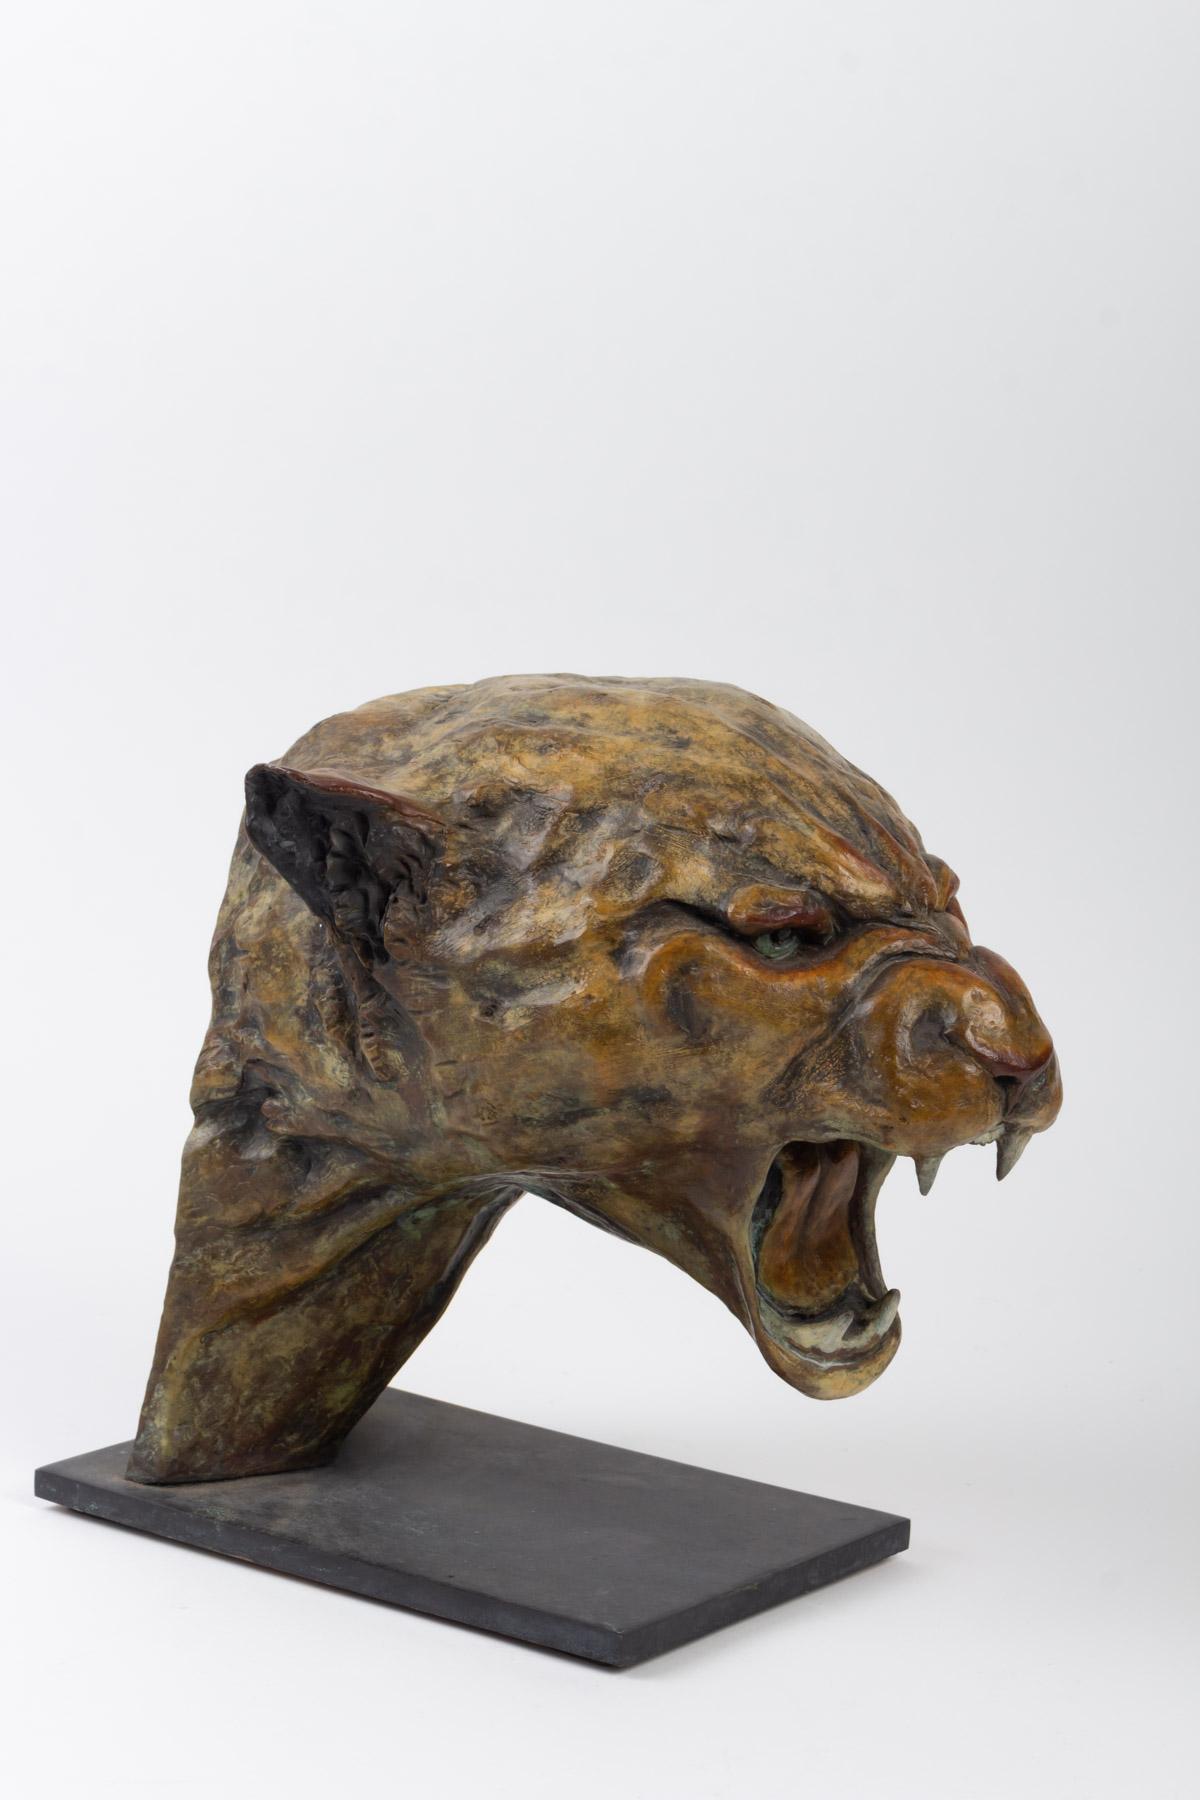 Head of a feline, patinated bronze 8/8, artist Jean Vassil.
Measures: H 26cm, W 22cm, D 30cm.